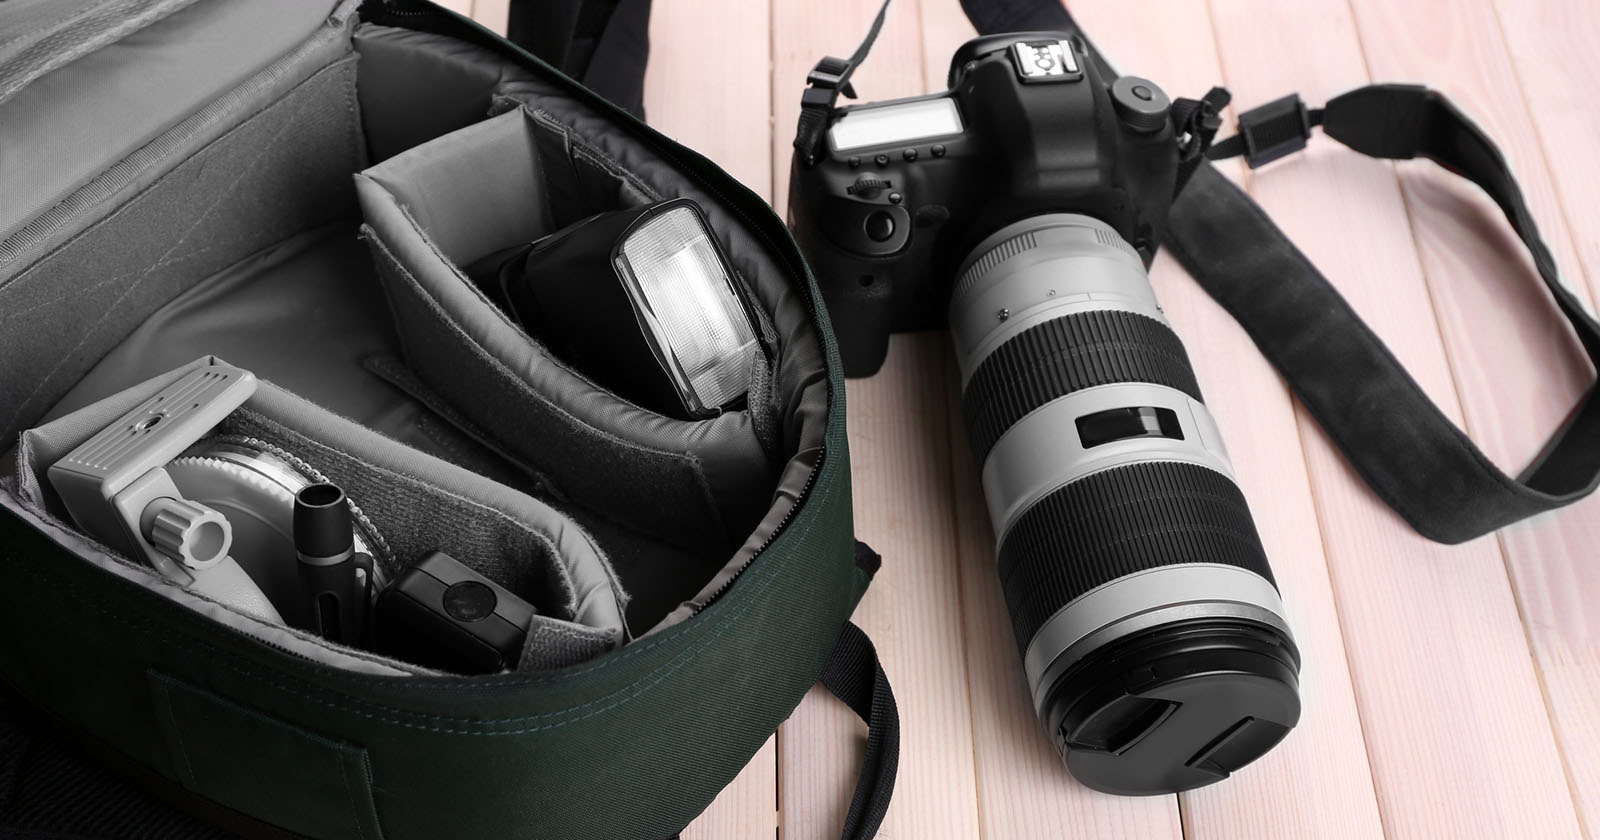 Buy DigiTekDCB 002 Lightweight Waterproof Camera Bag with Laptop  comparOnline Best Prices  Digitek